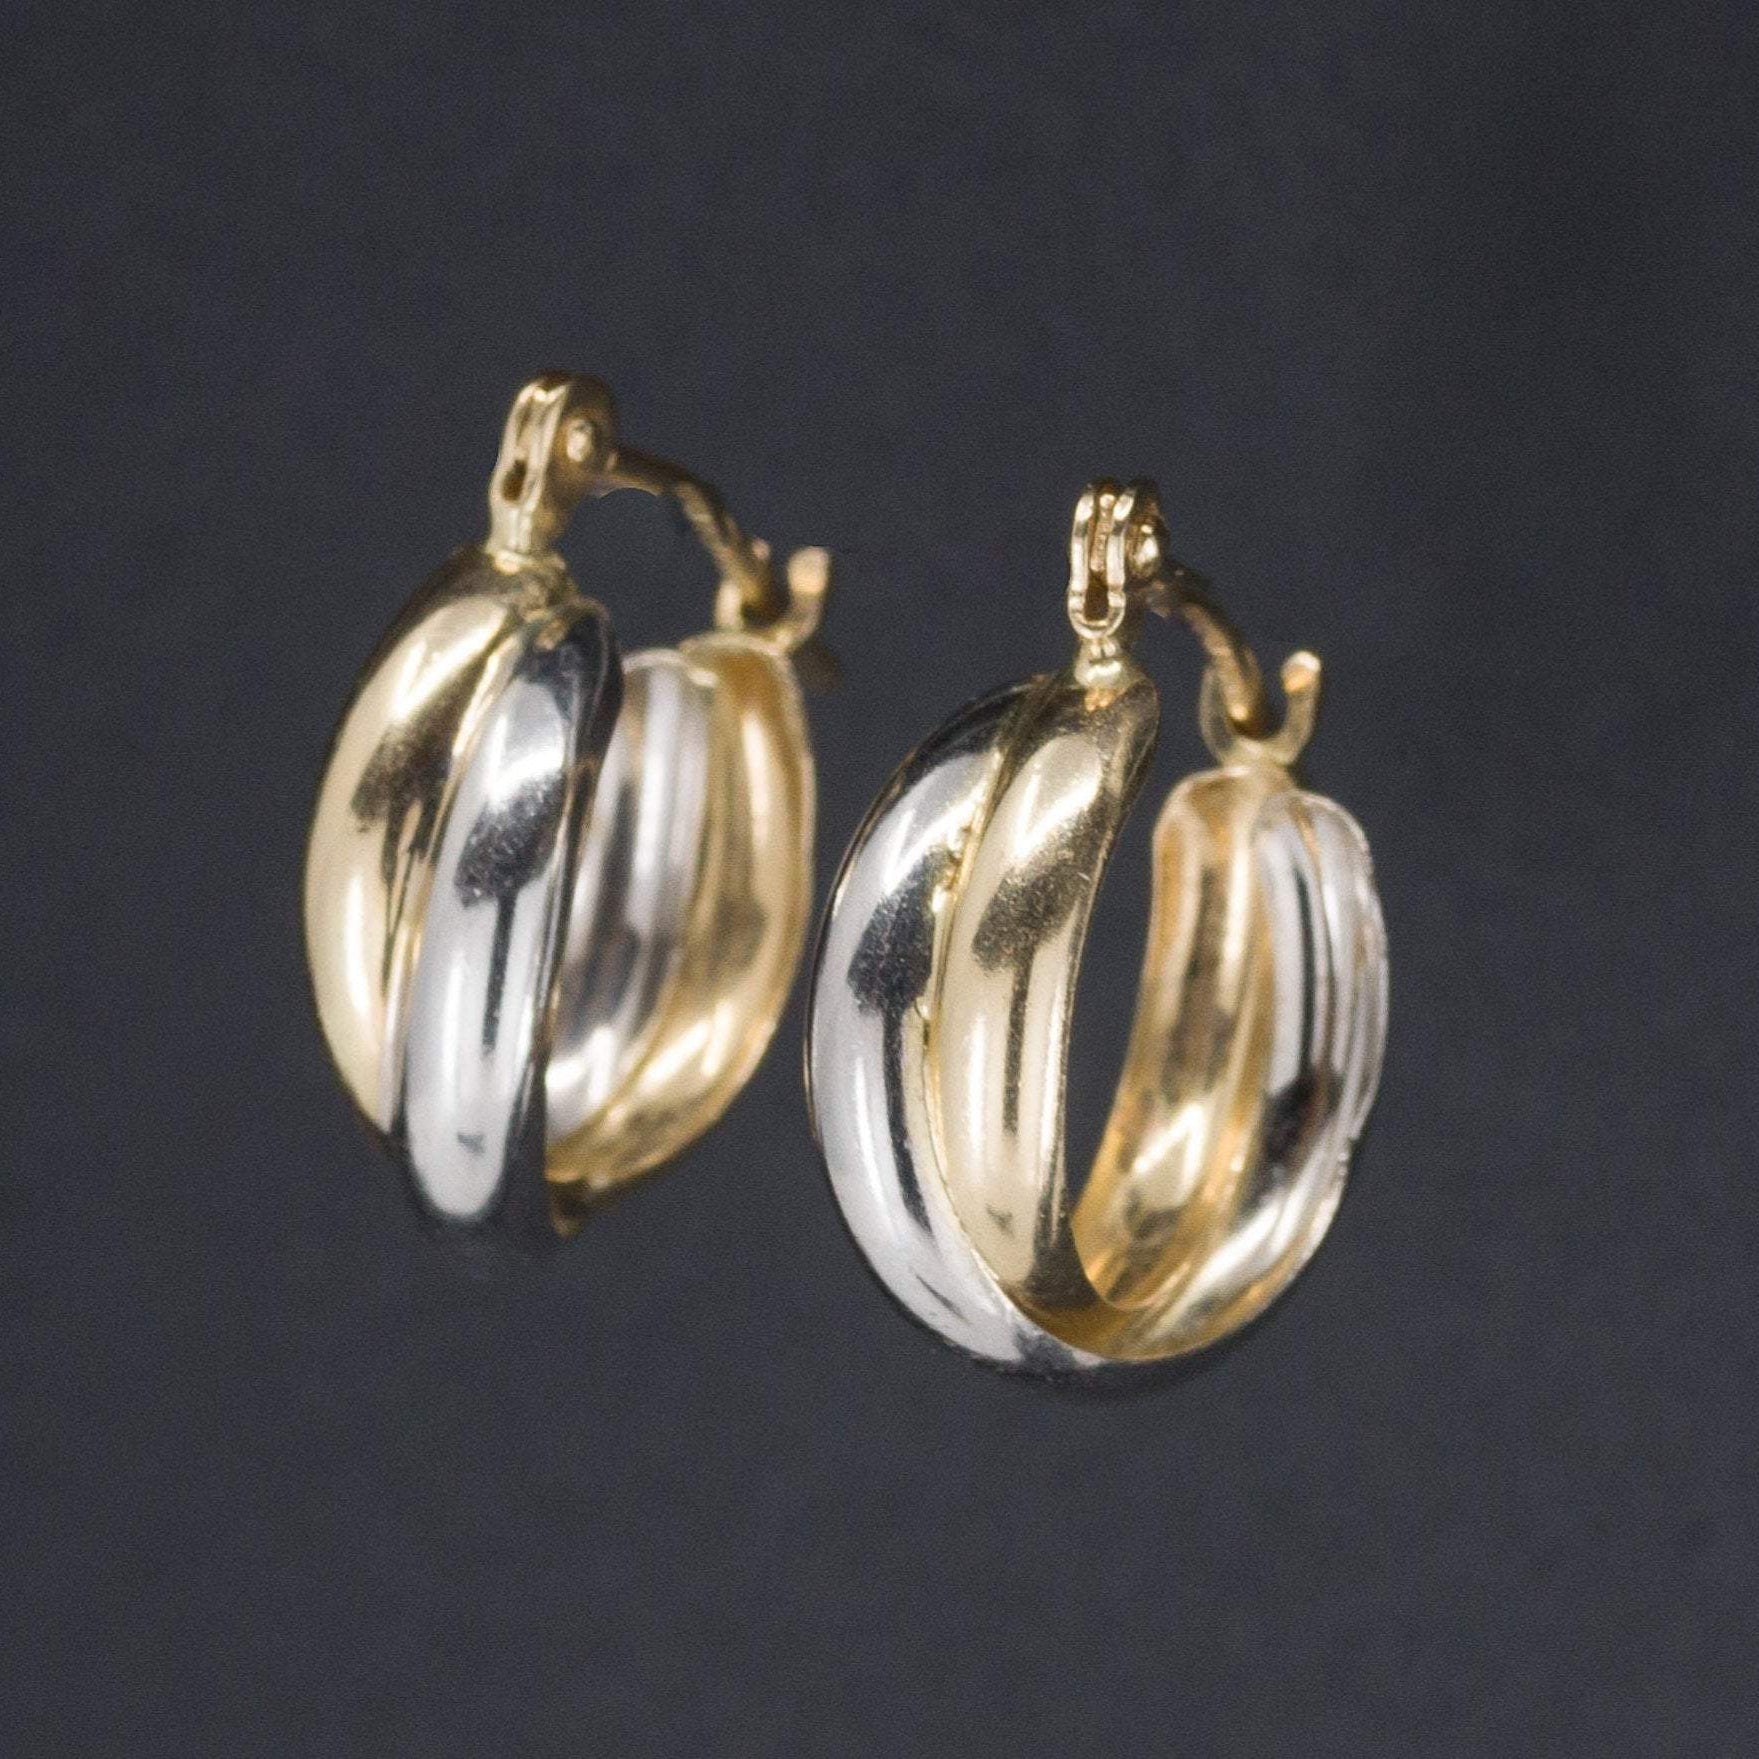 Vintage 14k Gold Earrings | Yellow & White Gold Hoop Earrings | Vintage Earrings | 14k Earrings | Pierced Earrings